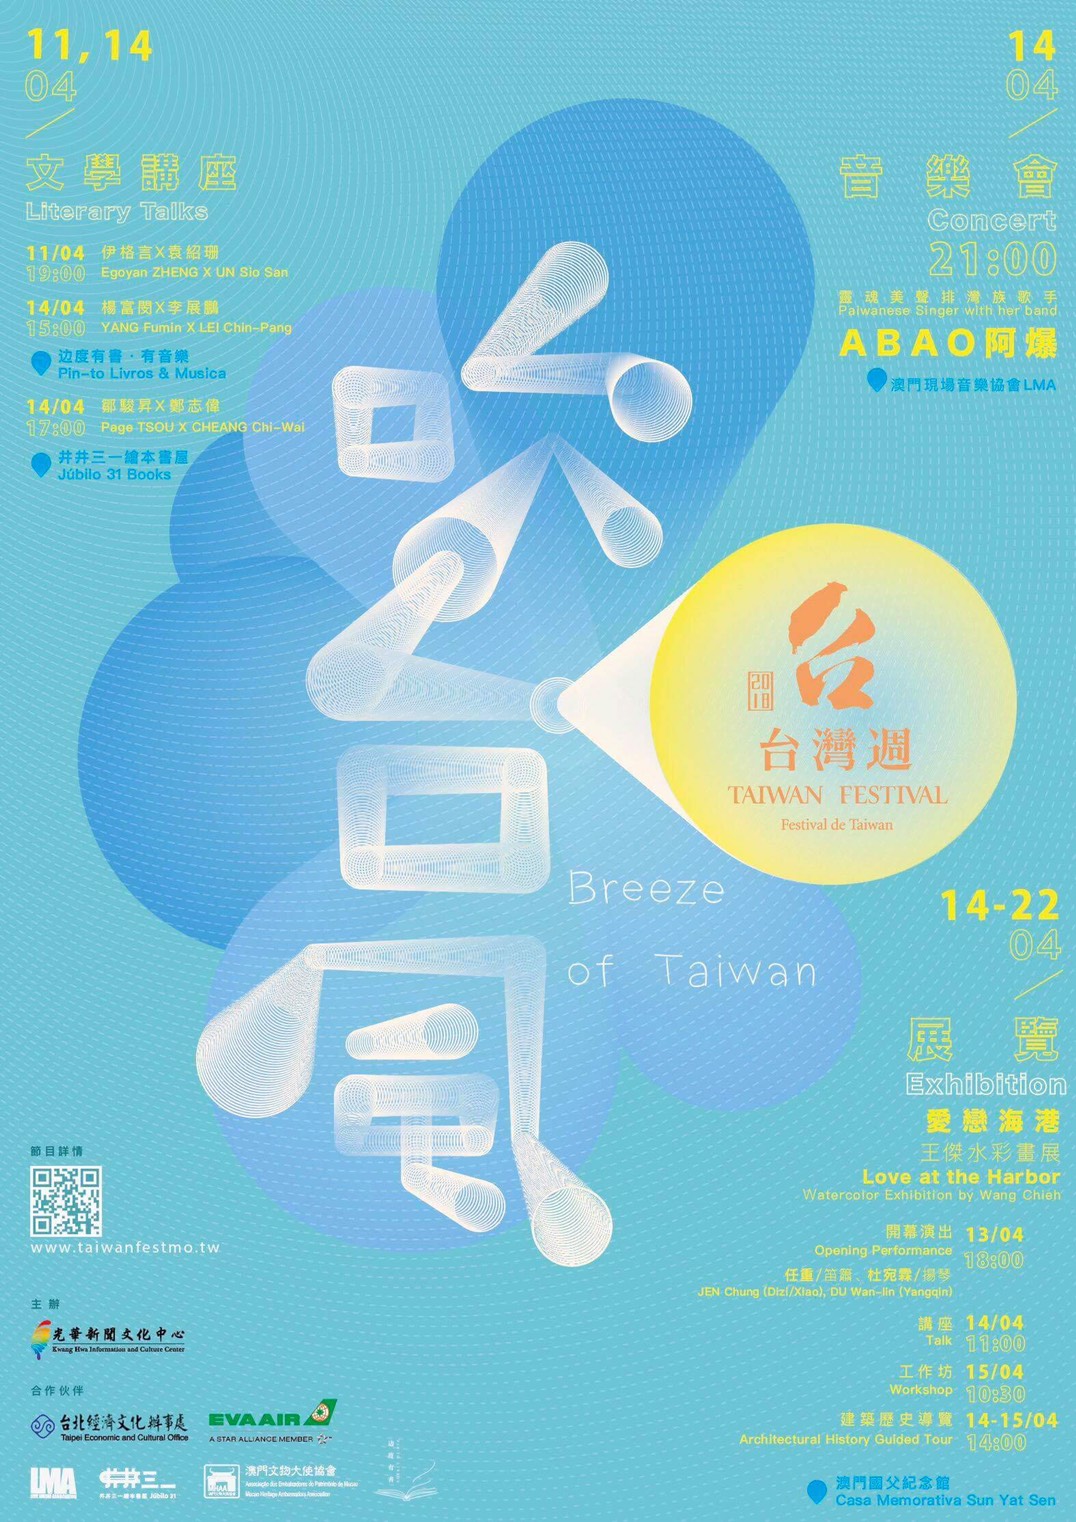 Taiwan-themed arts fest to bring music, literature to Macau   